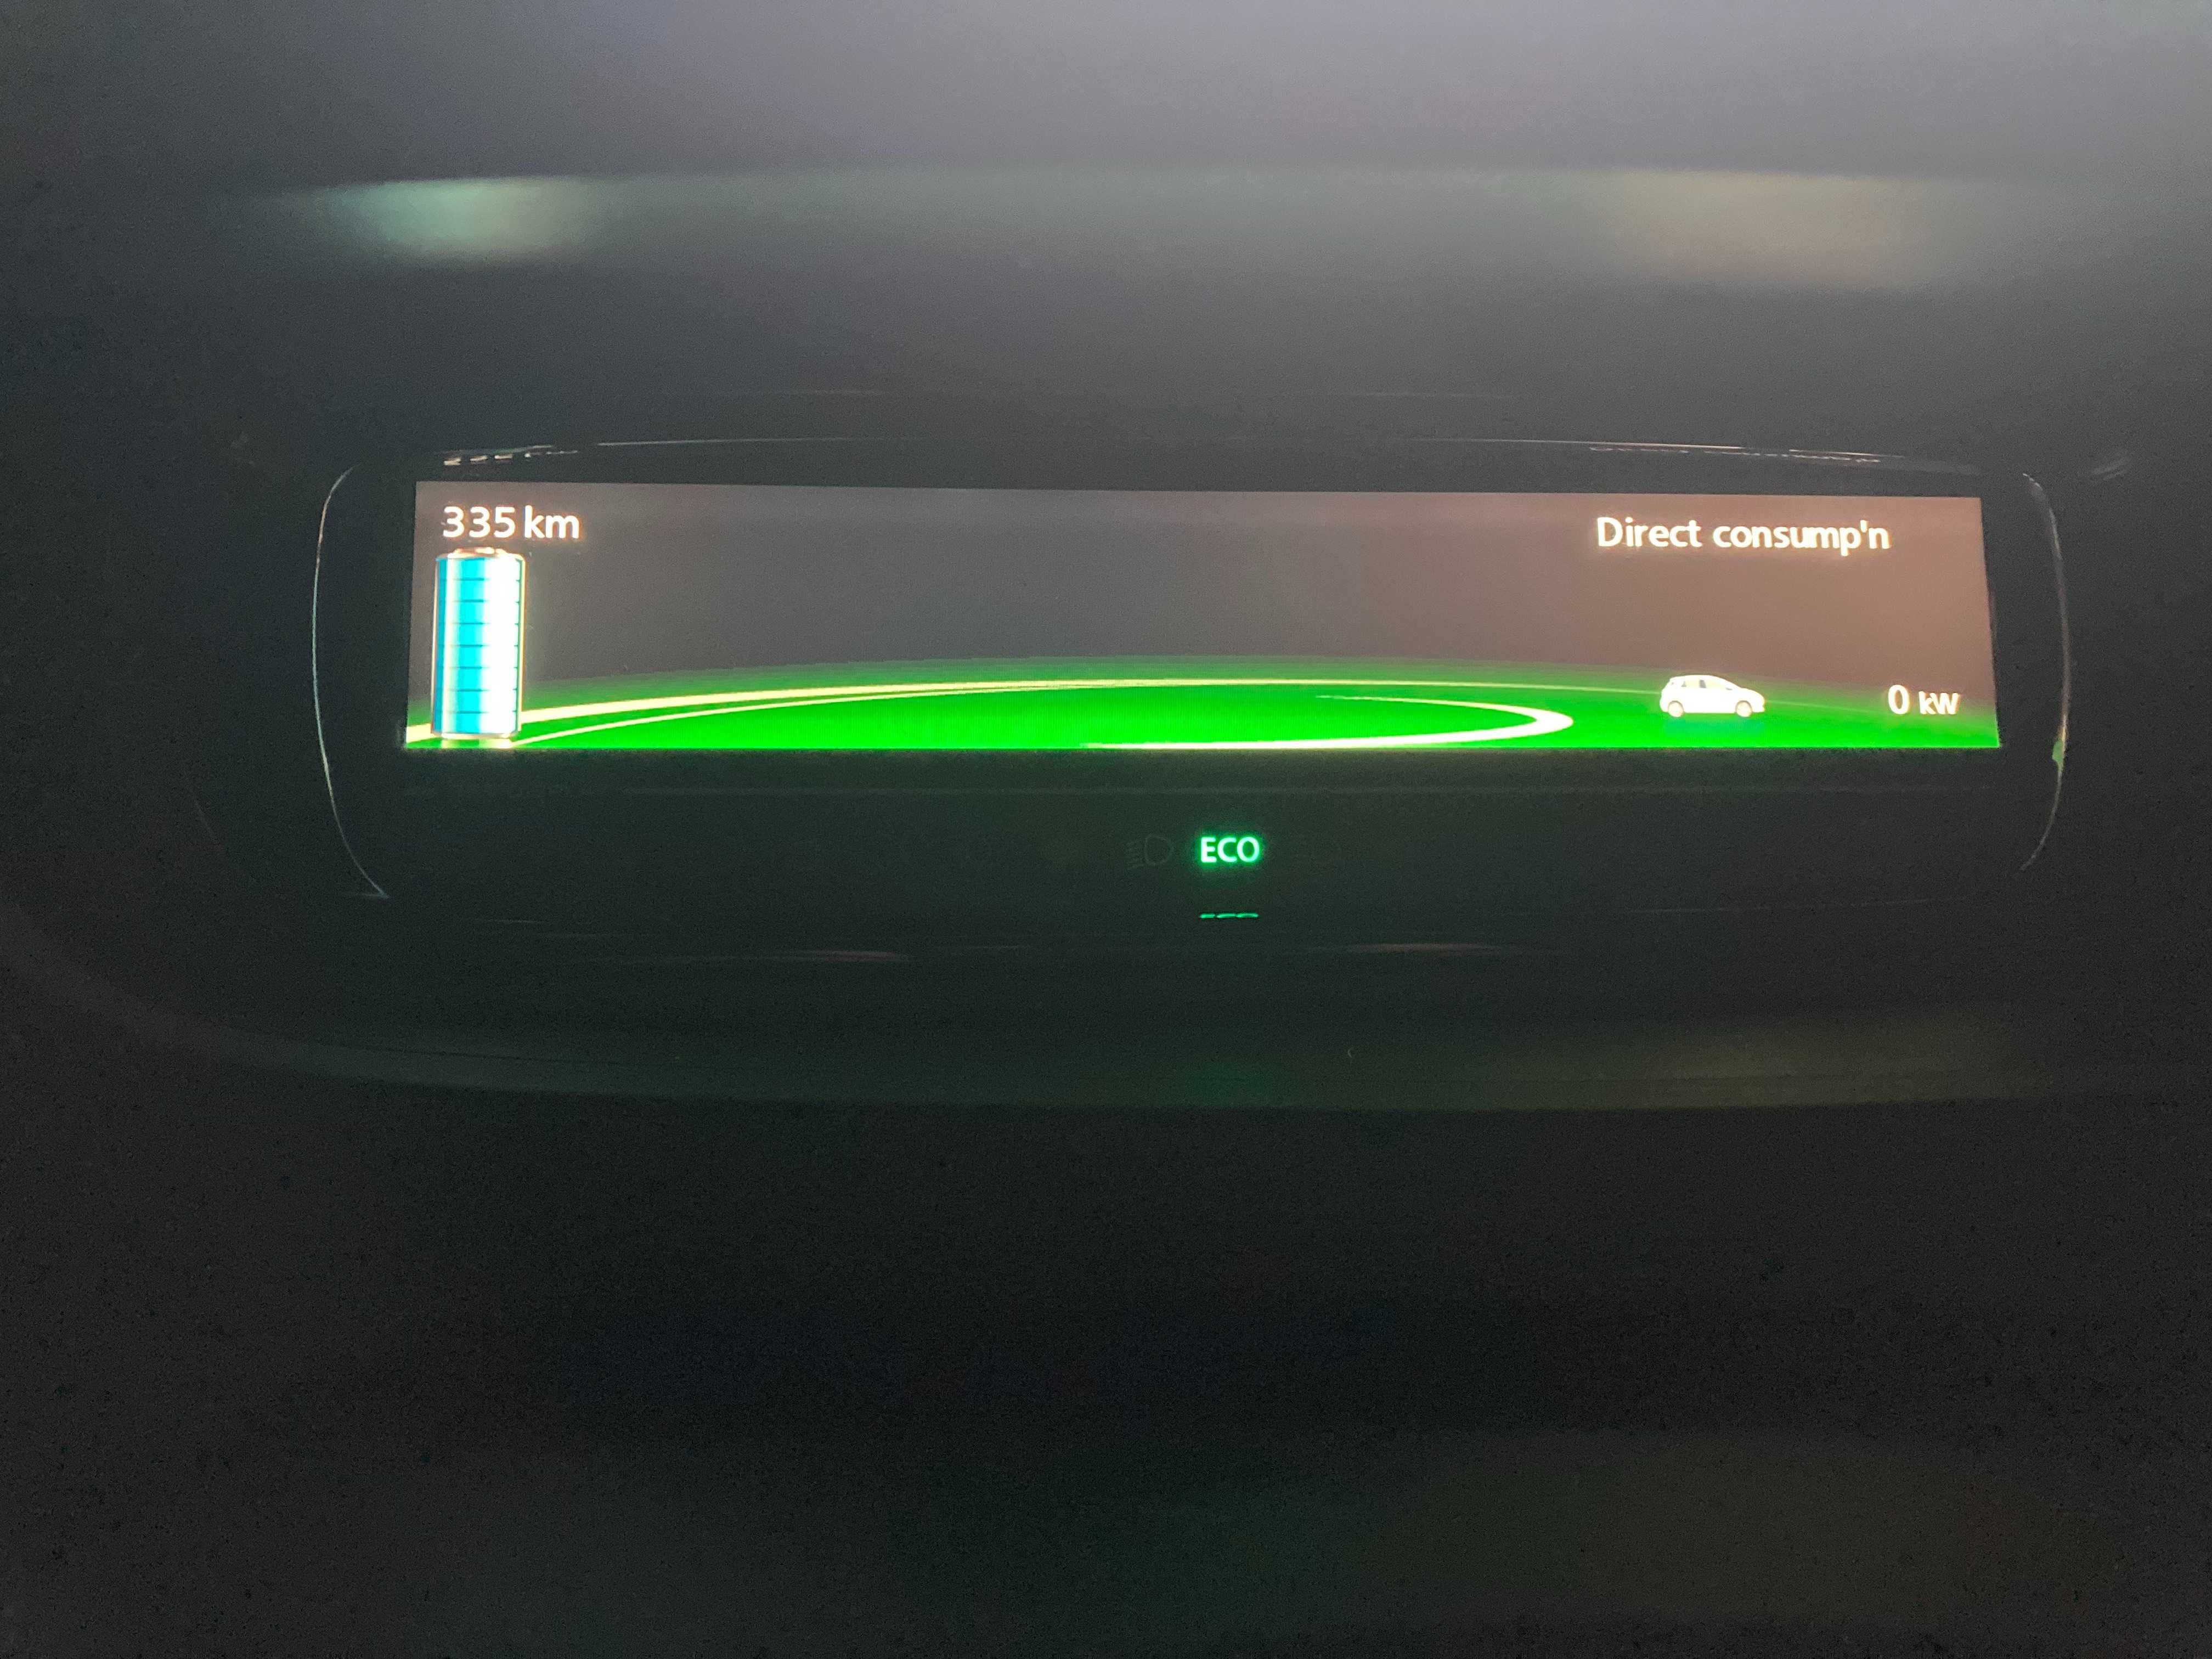 Renault Zoe 2019 41 kWh (рено зое)